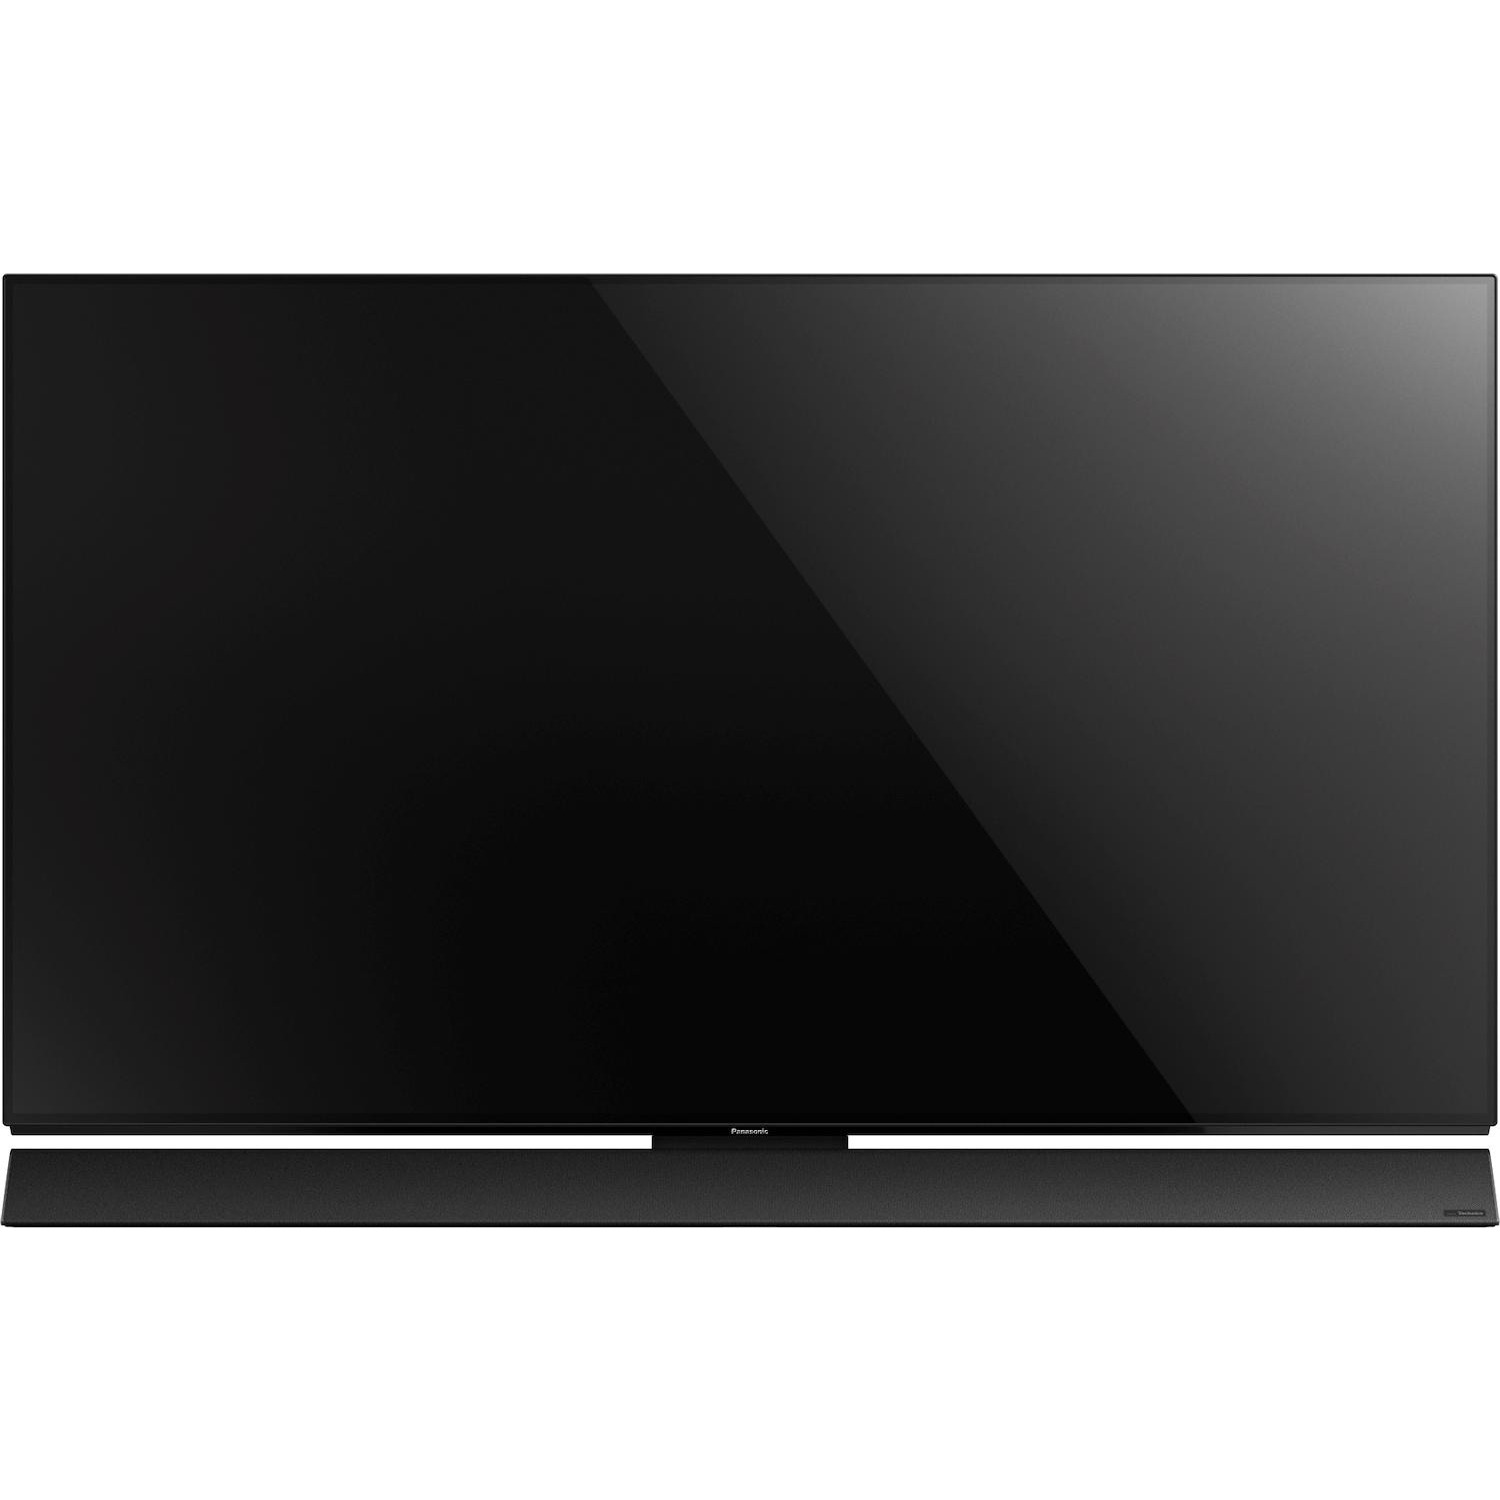 Immagine per TV OLED UHD 4K Smart Panasonic 55FZ950 da DIMOStore